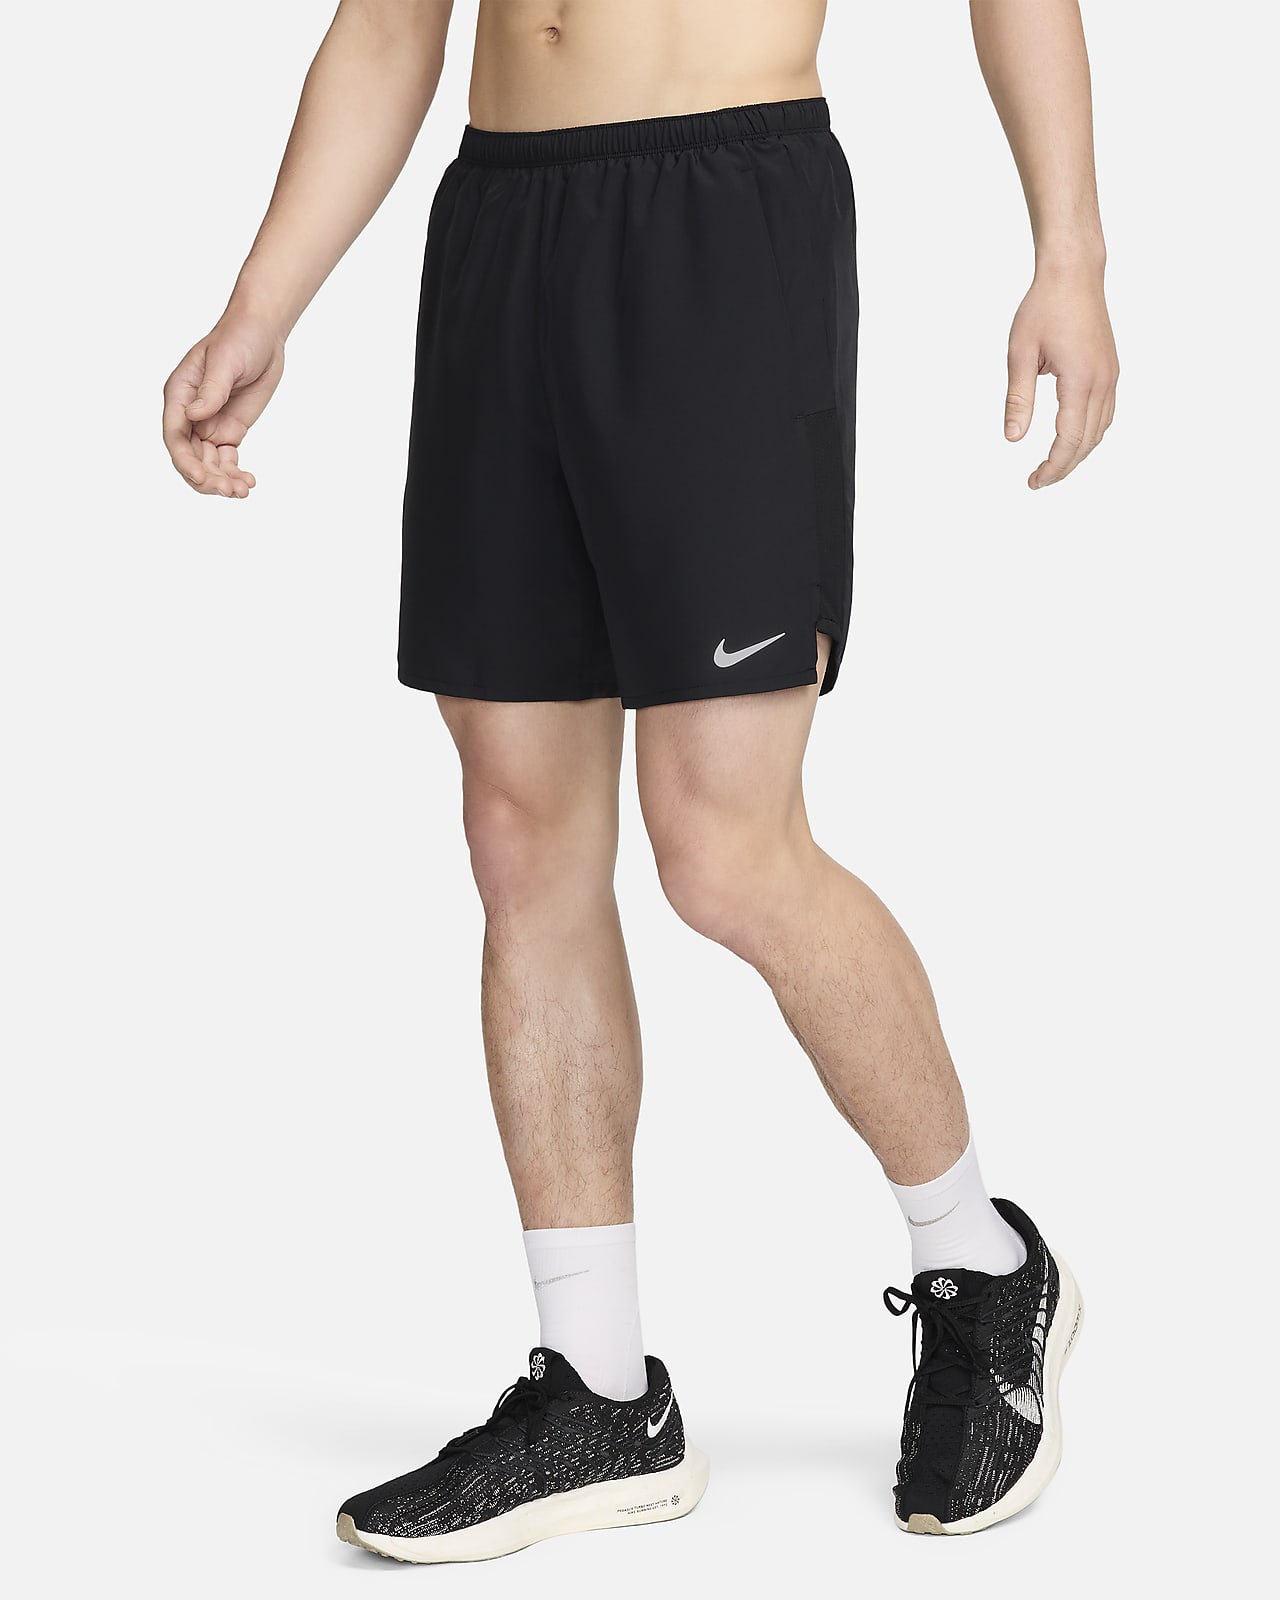 Brief-Lined Running Shorts. Nike JP